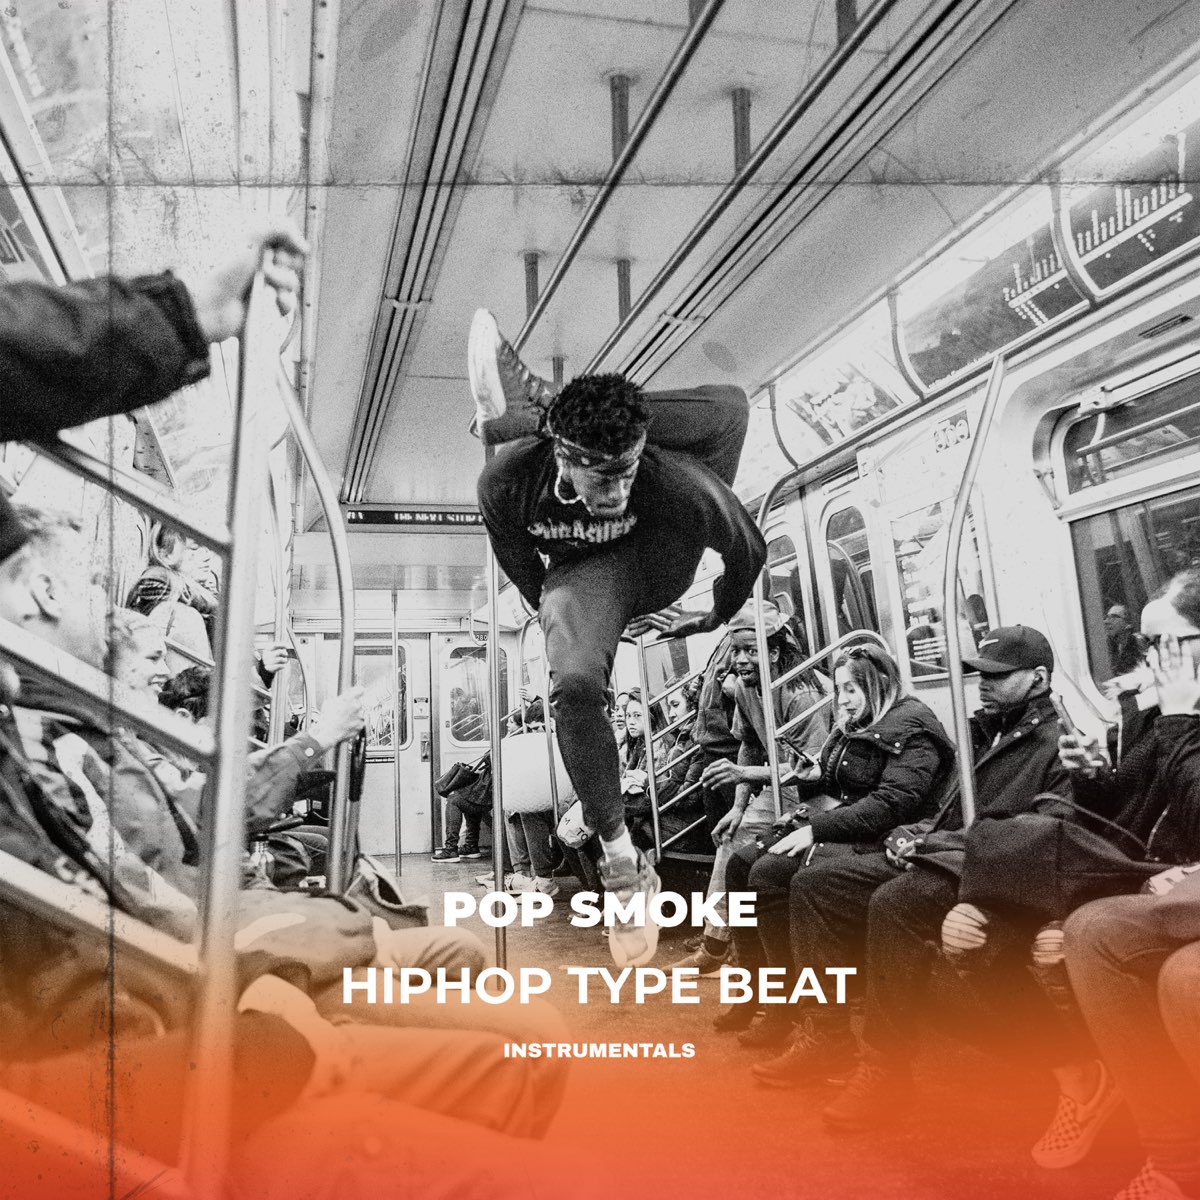 Pop Smoke HipHop Type Beat (Instrumentals) – Album par Hip Hop Type Beat, Instrumental  Rap Hip Hop & Trap House Mafia – Apple Music